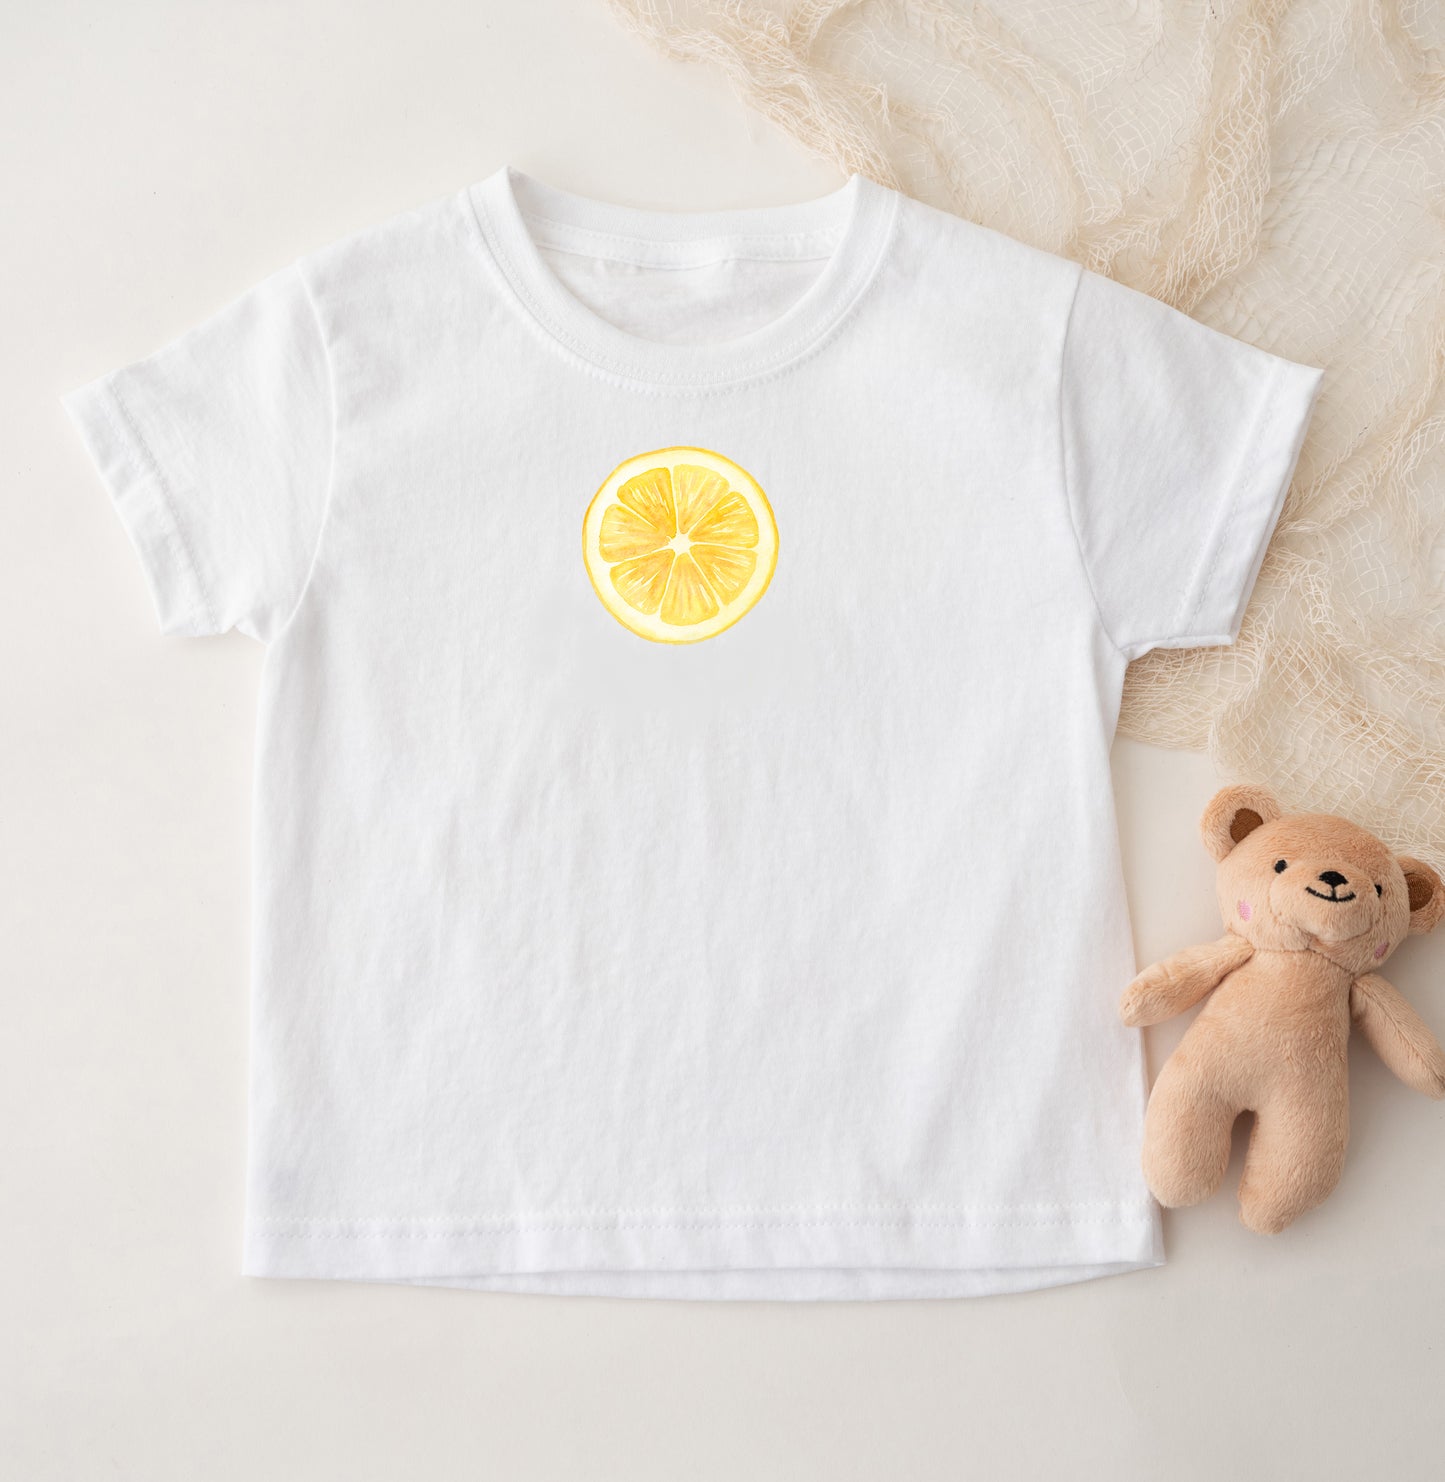 Lemon Slice Baby T-Shirt, 6 months - 24 months, White